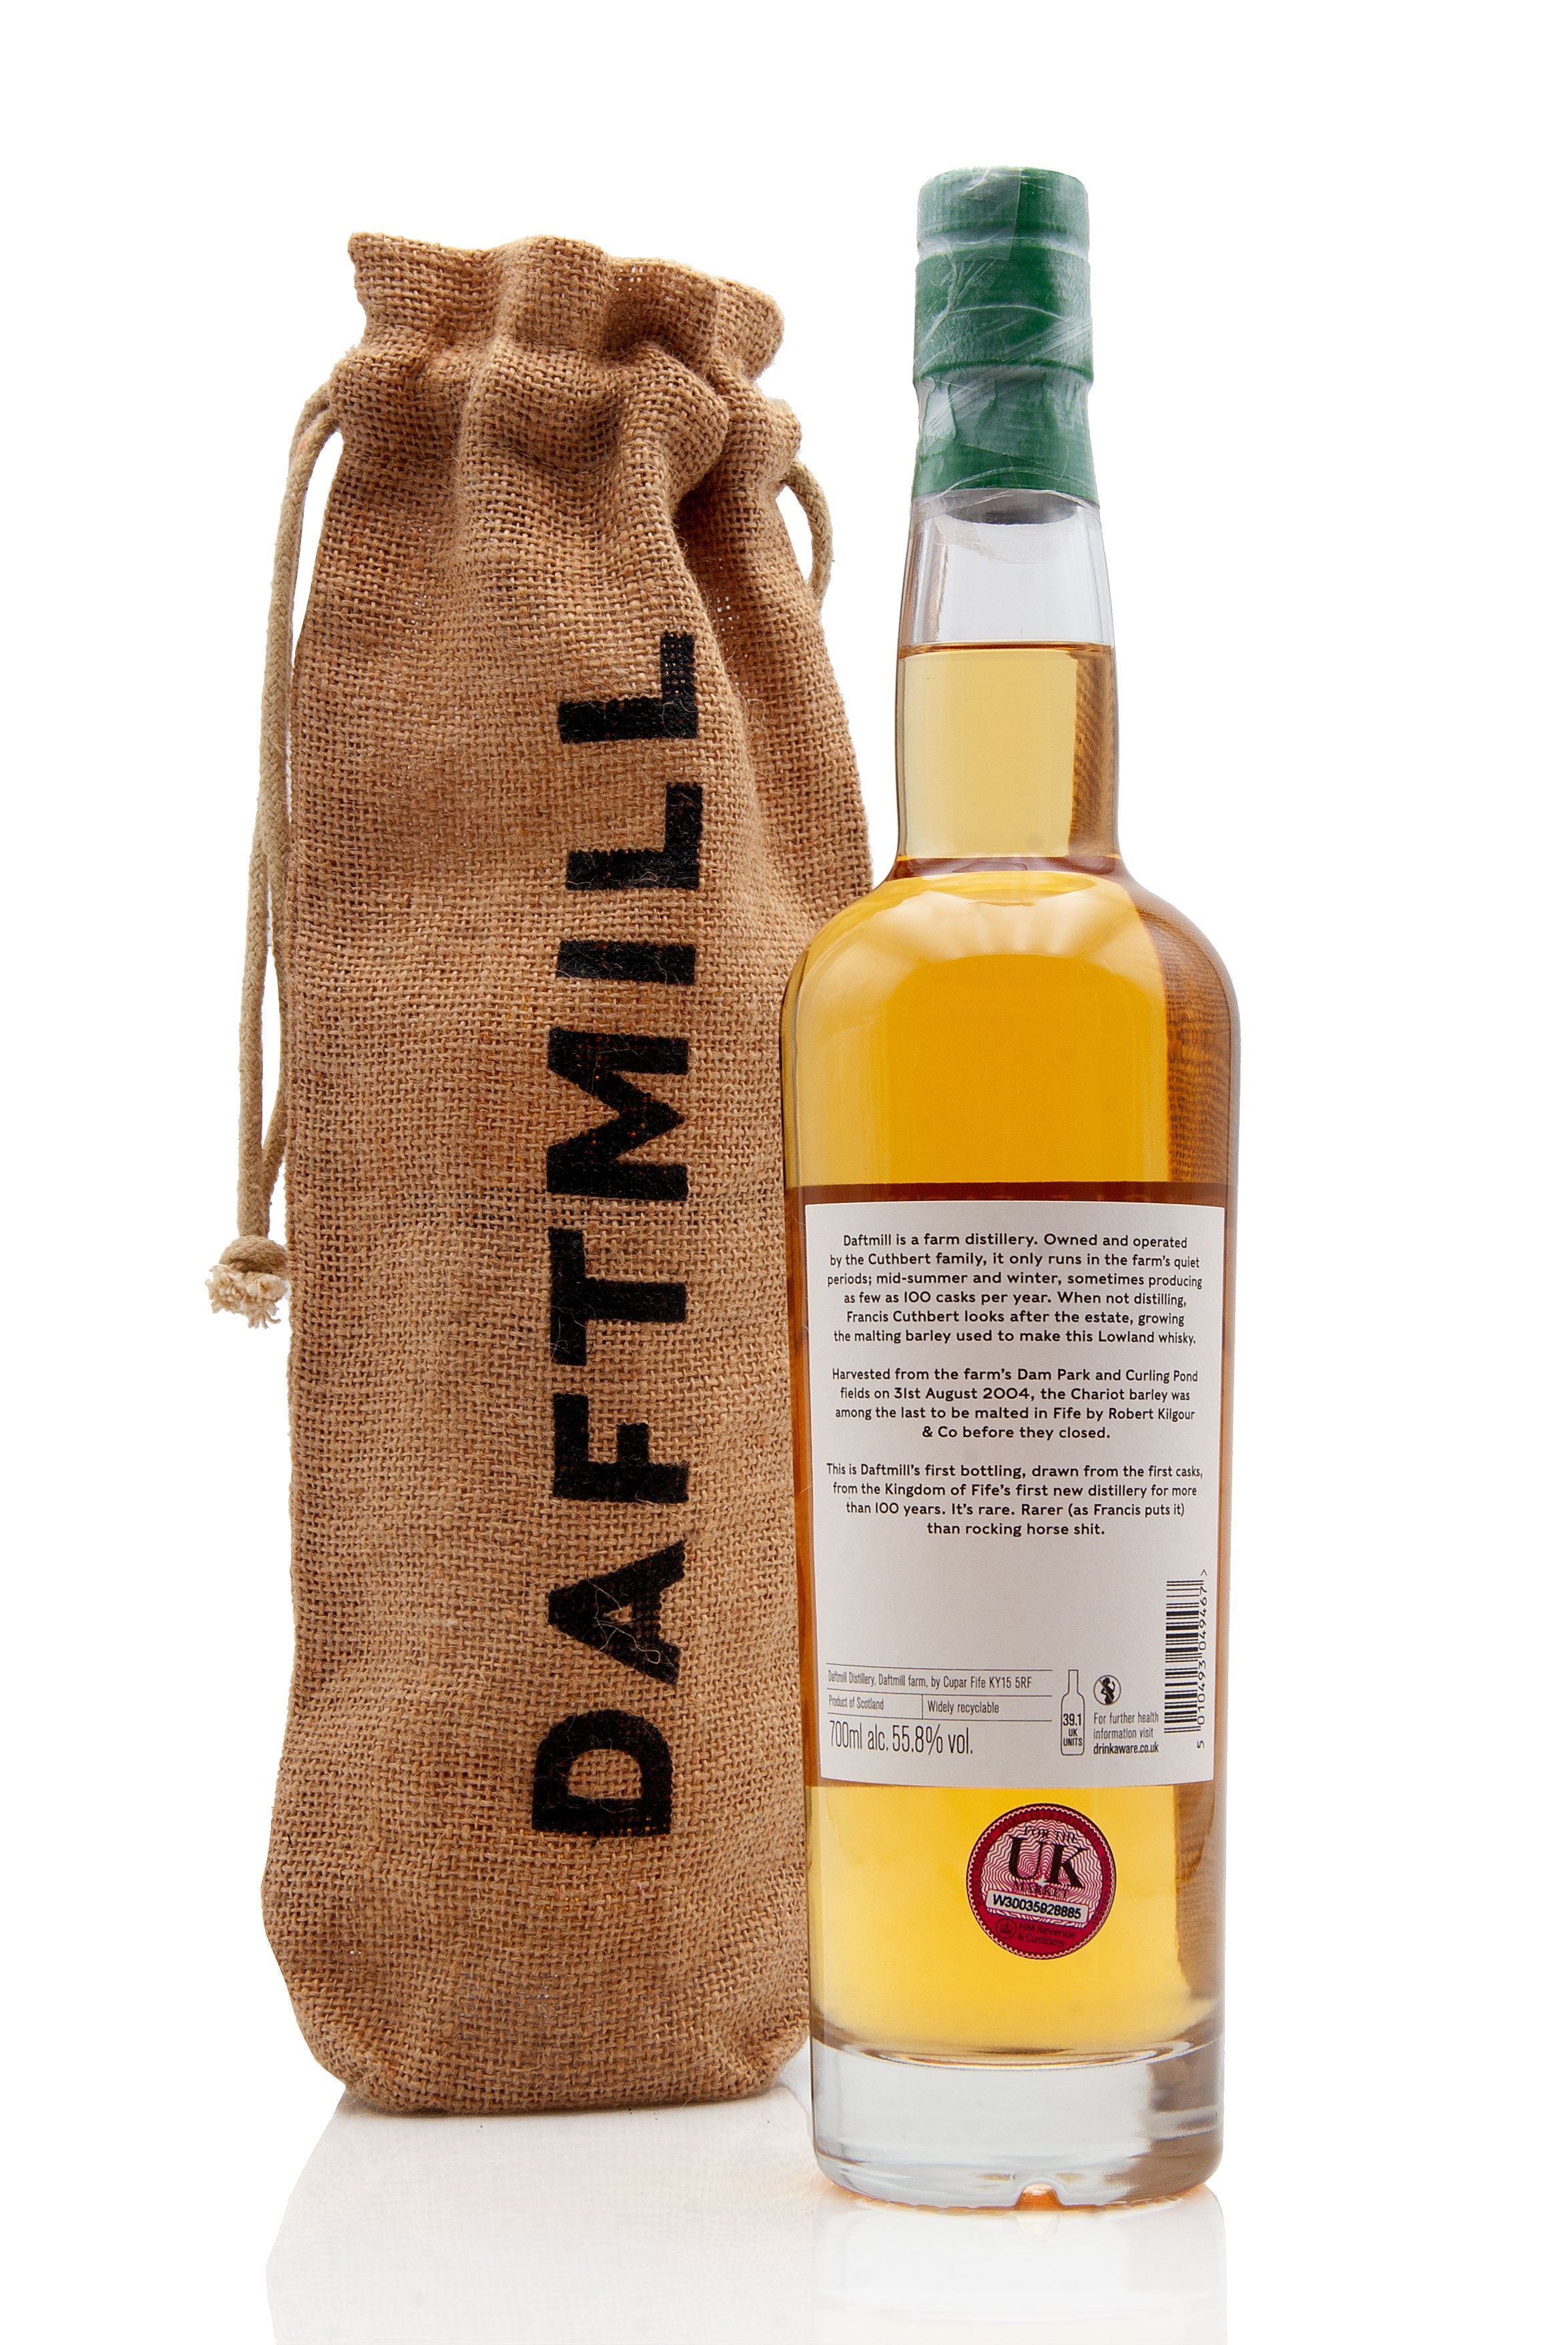 Daftmill 12 Year Old - 2005 | Inaugural Release